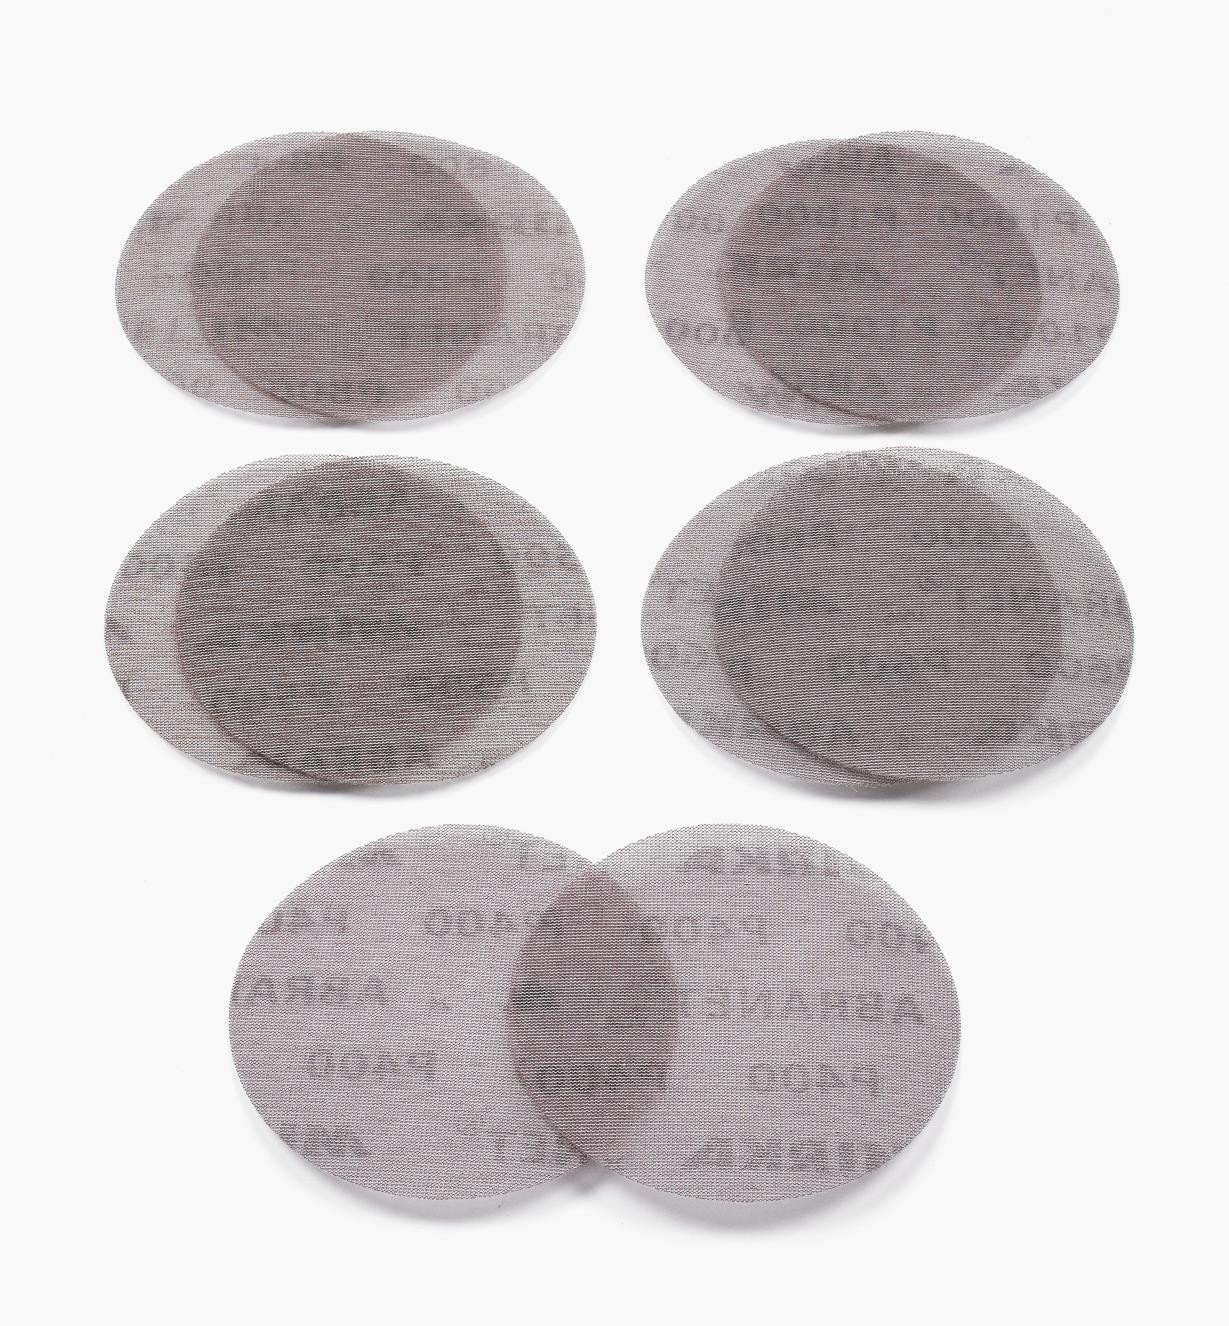 08K1020 - 10-Pc. Sample Pack of Mirka 5" Fine Abranet Grip Discs